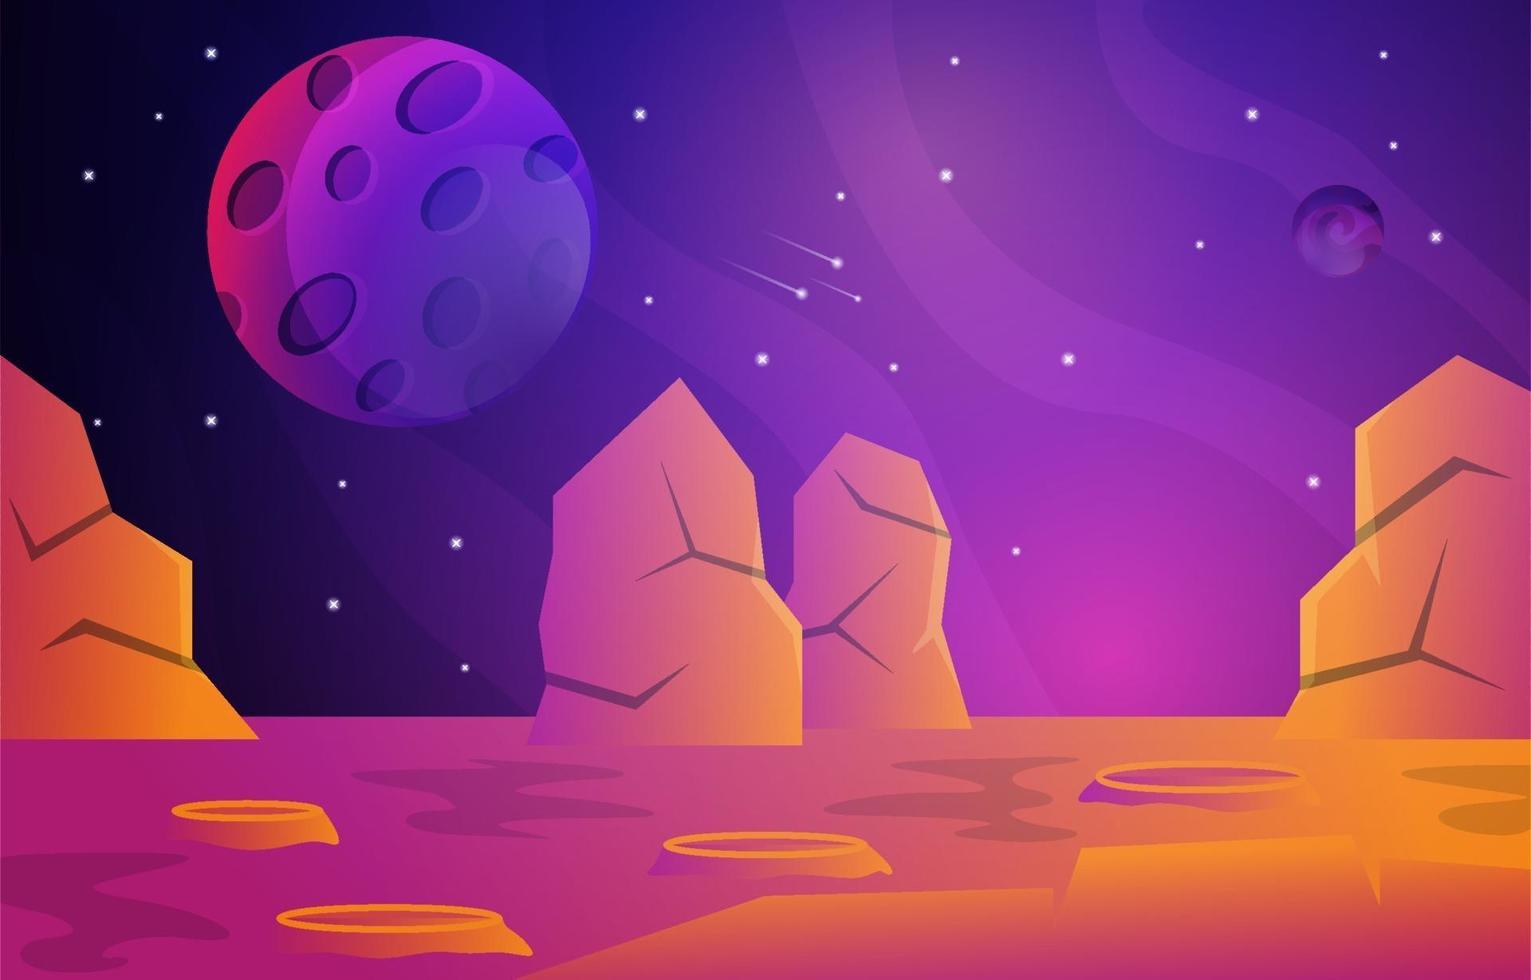 Rock Stone Planet Star Sky Space Universe Exploration Illustration vector